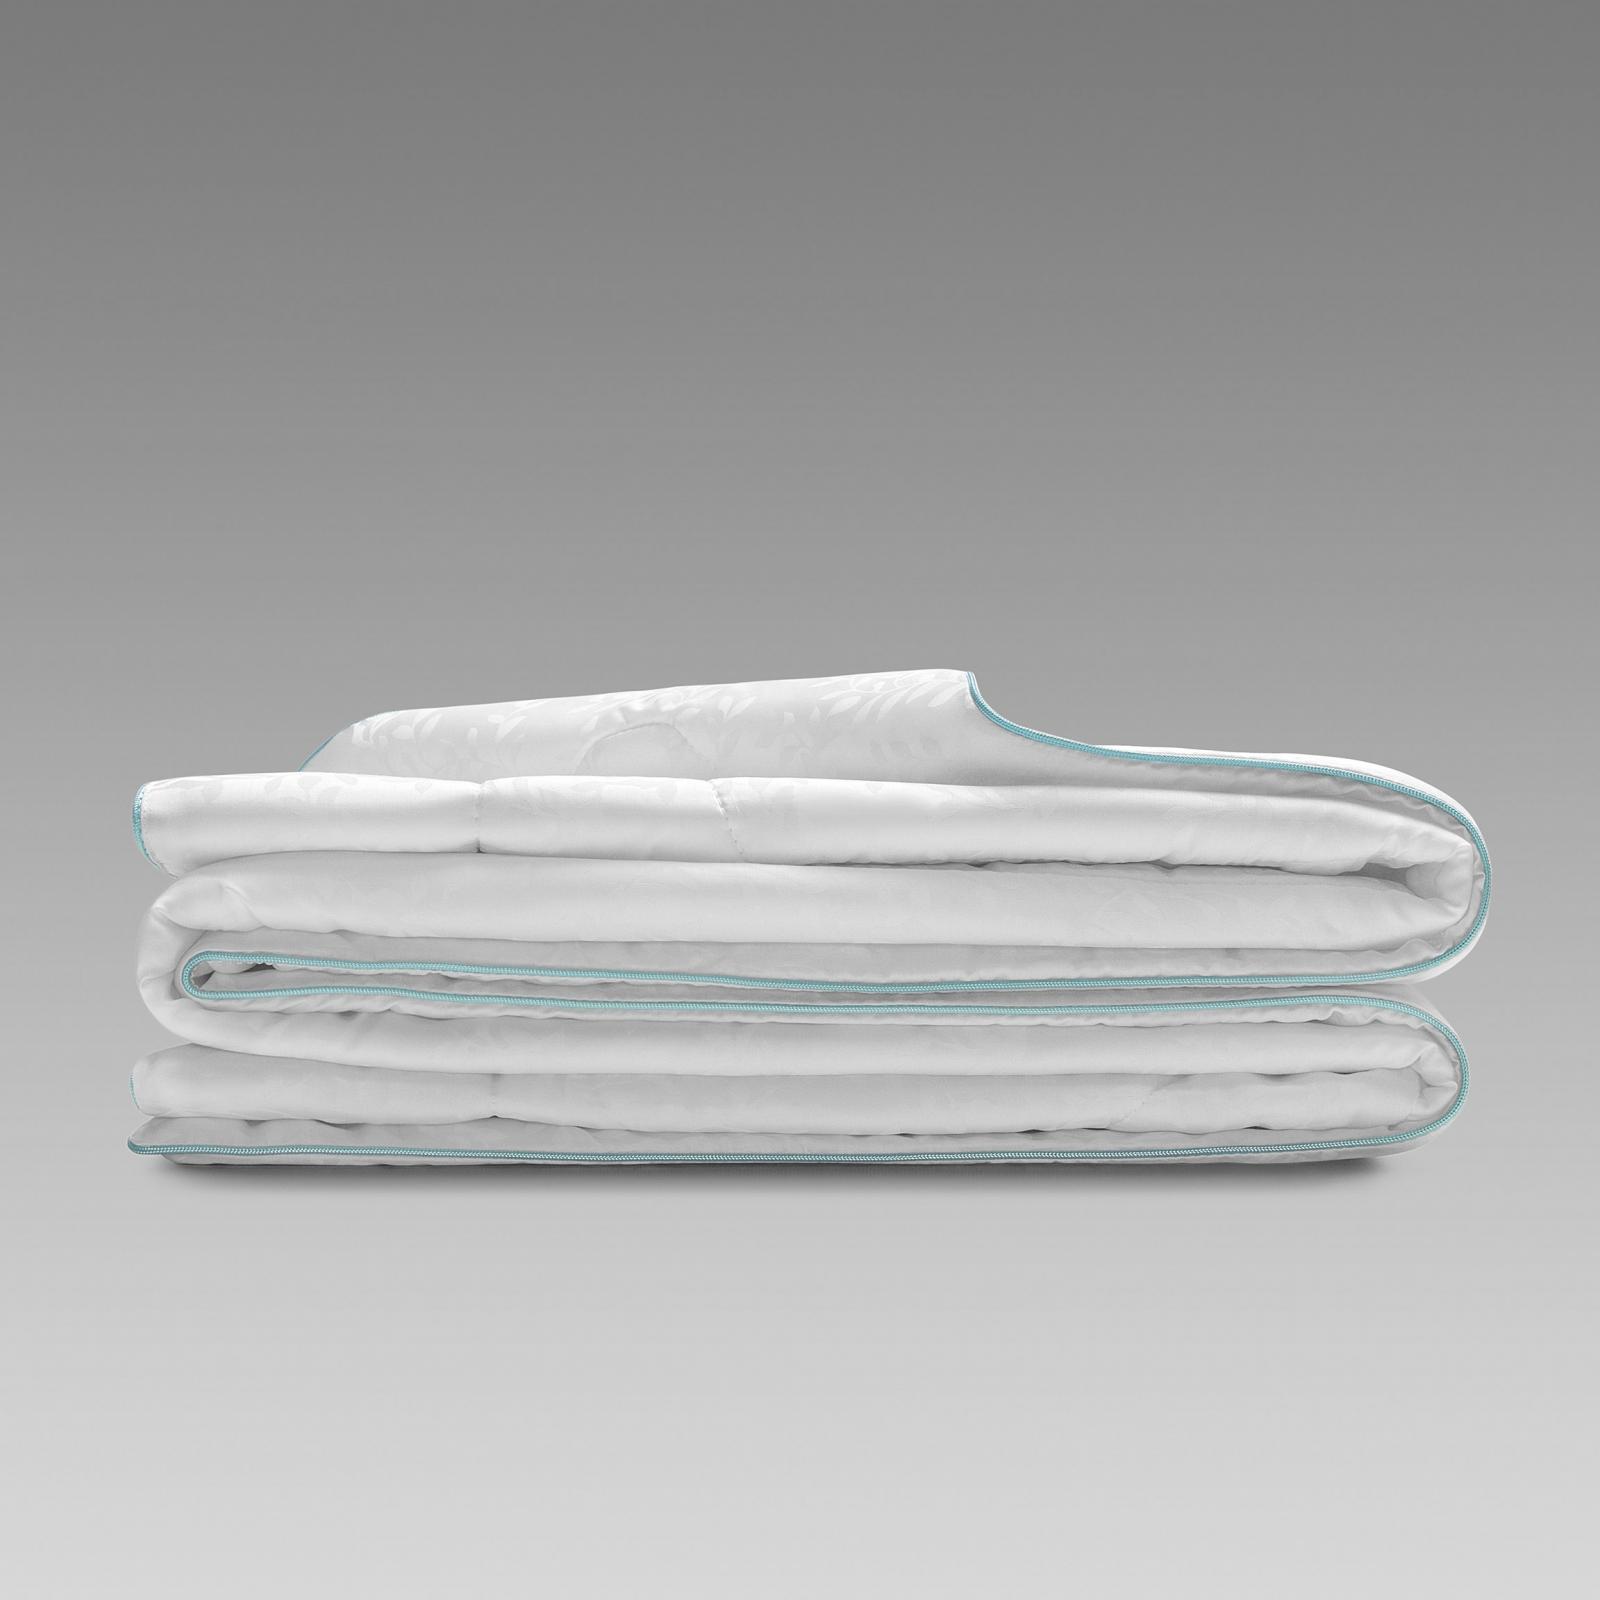 Одеяло Togas эвкалипт дримс 140х200, размер 140х200 см - фото 2